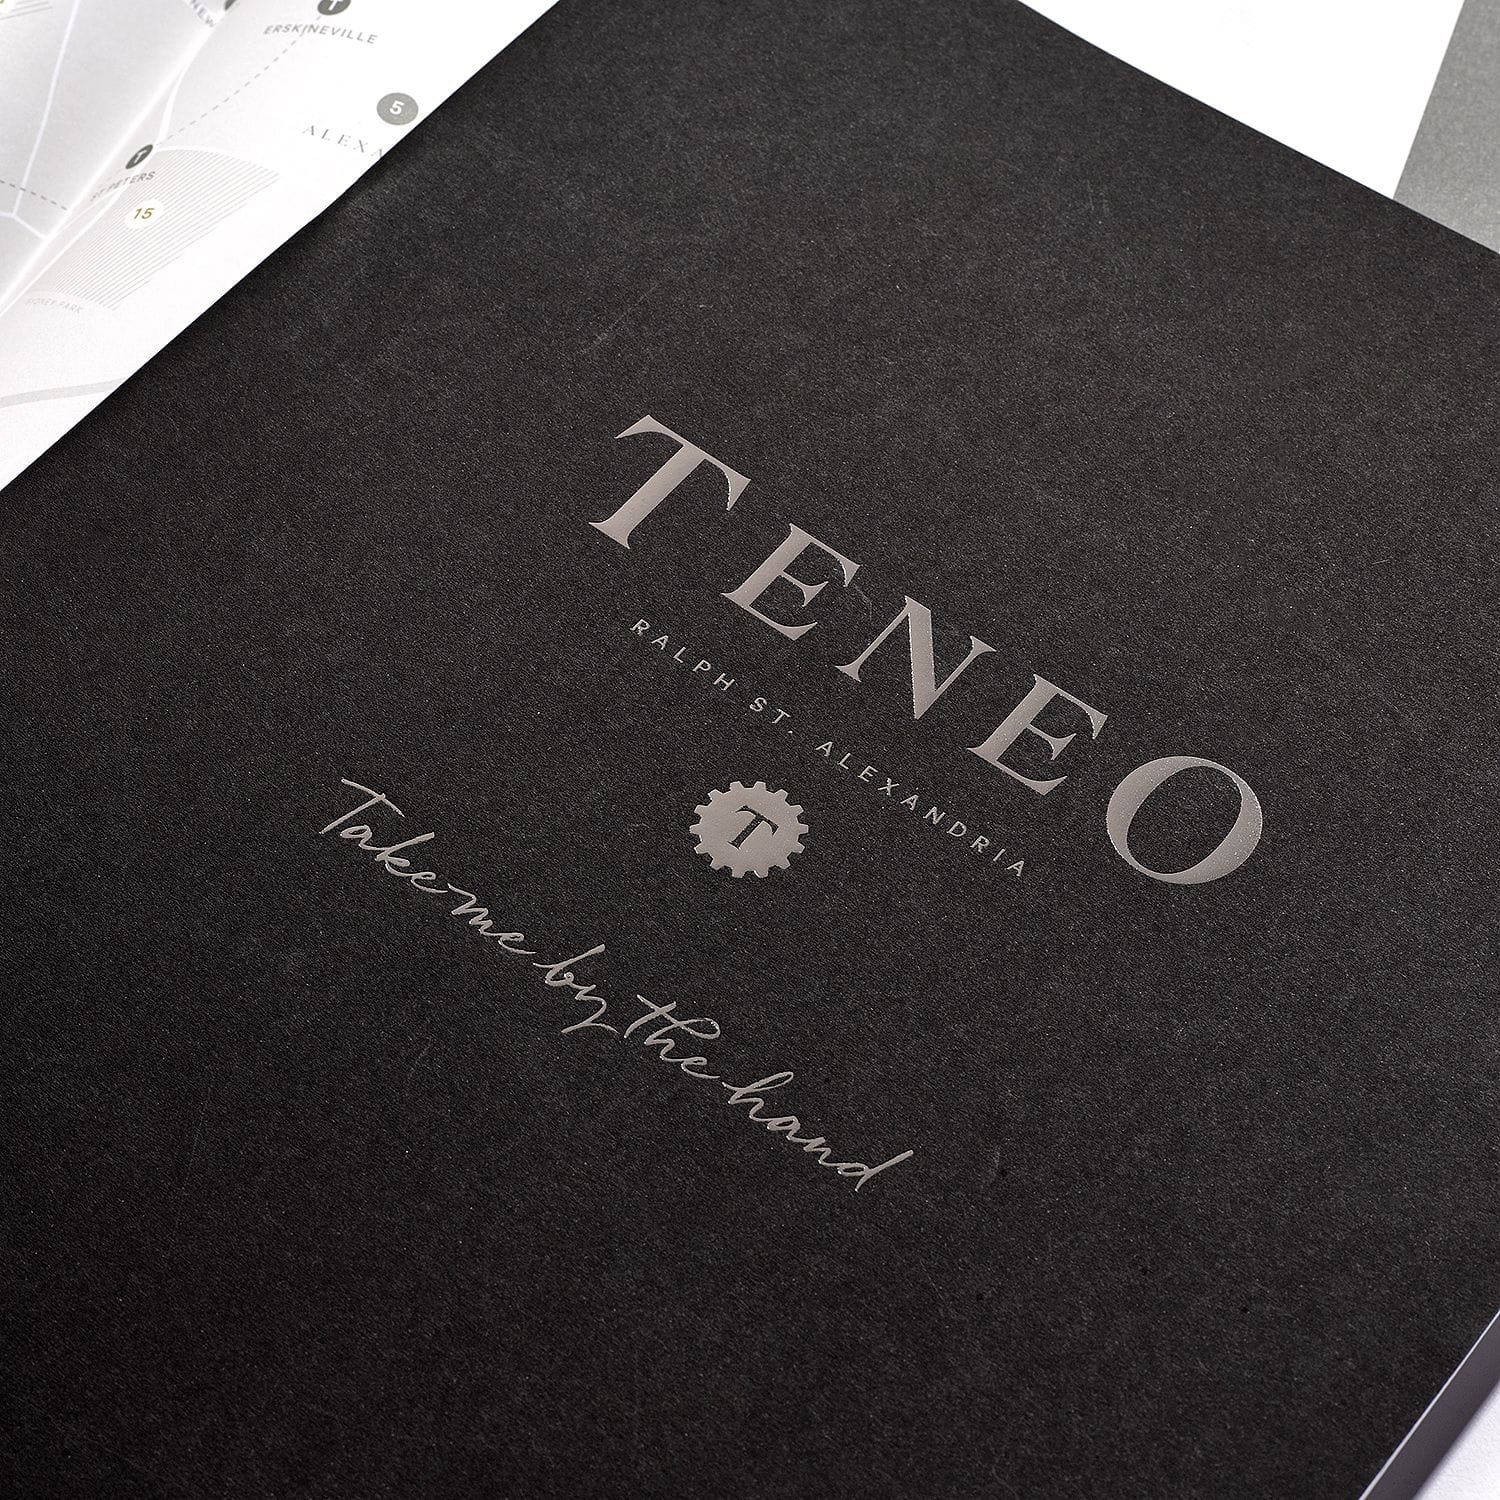 Teneo Book Printing | Digitalpress Printing Sydney